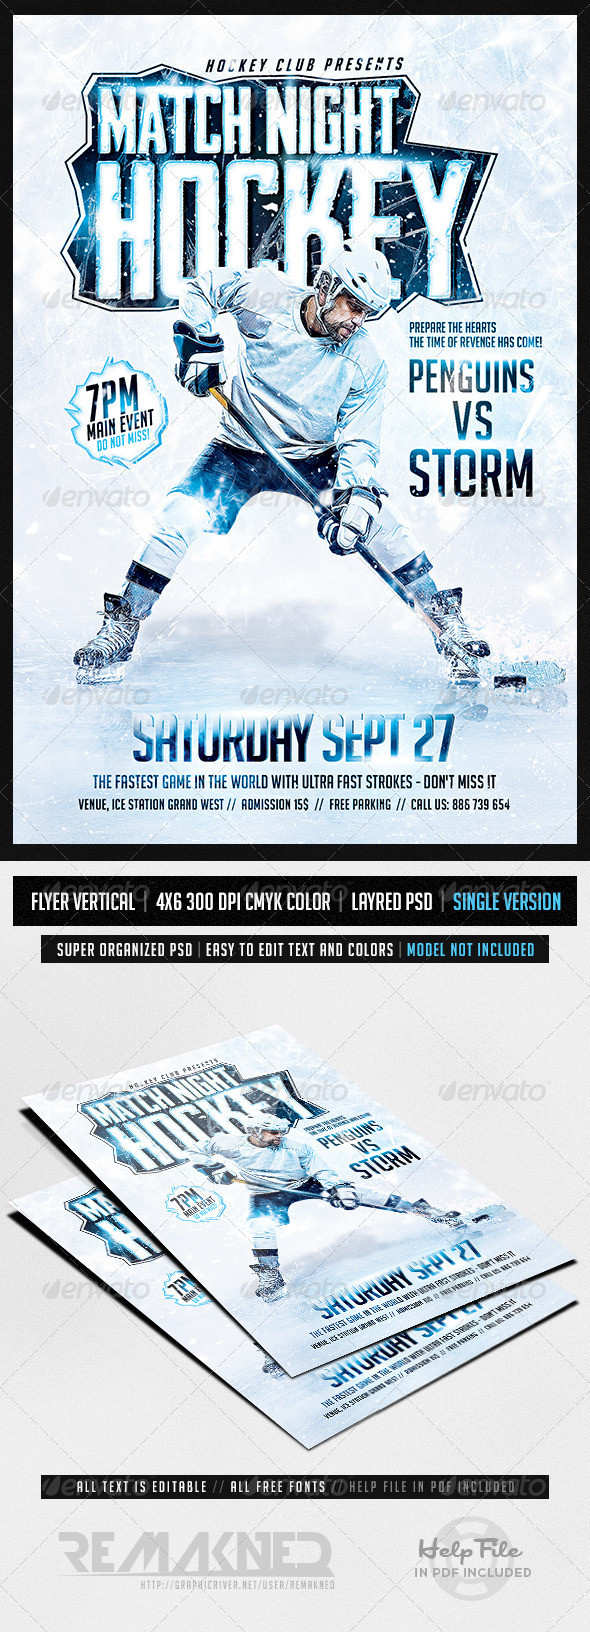 Hockey game flyer template psd